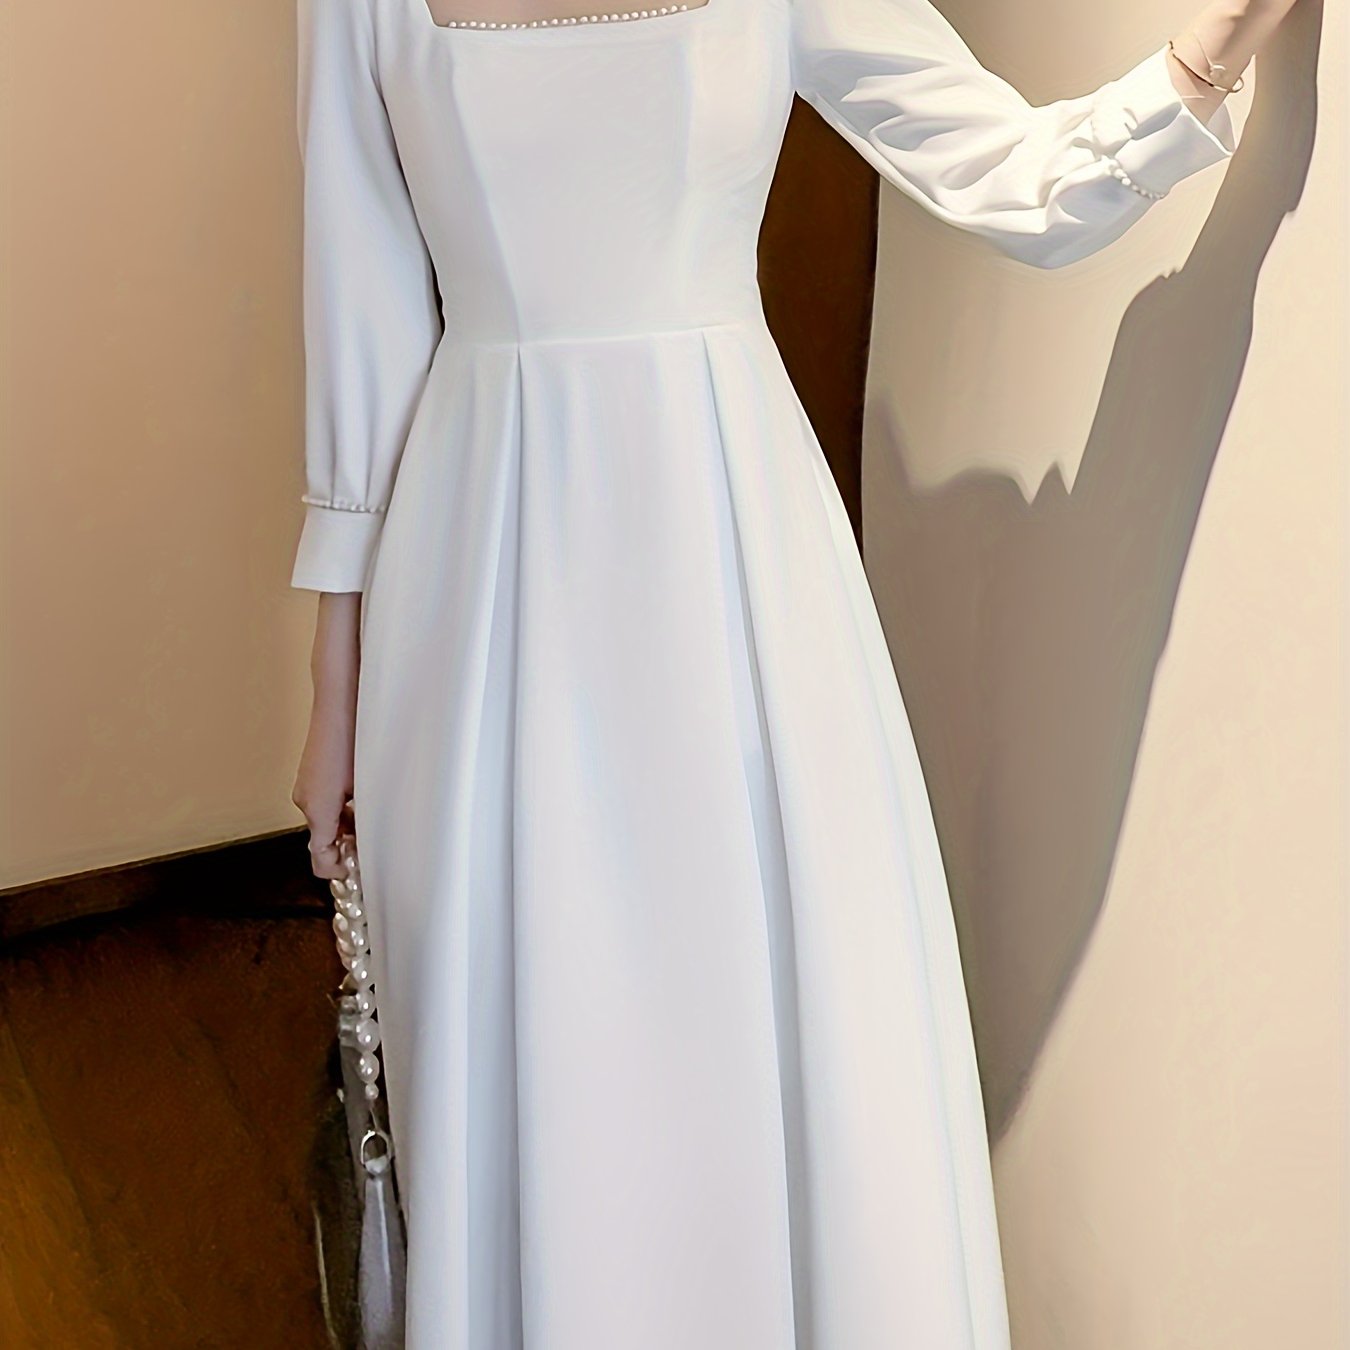 Vzyzv Beaded Square Neck Dress, Elegant Bow Decor Aline Dress For Wedding Party, Women's Clothing